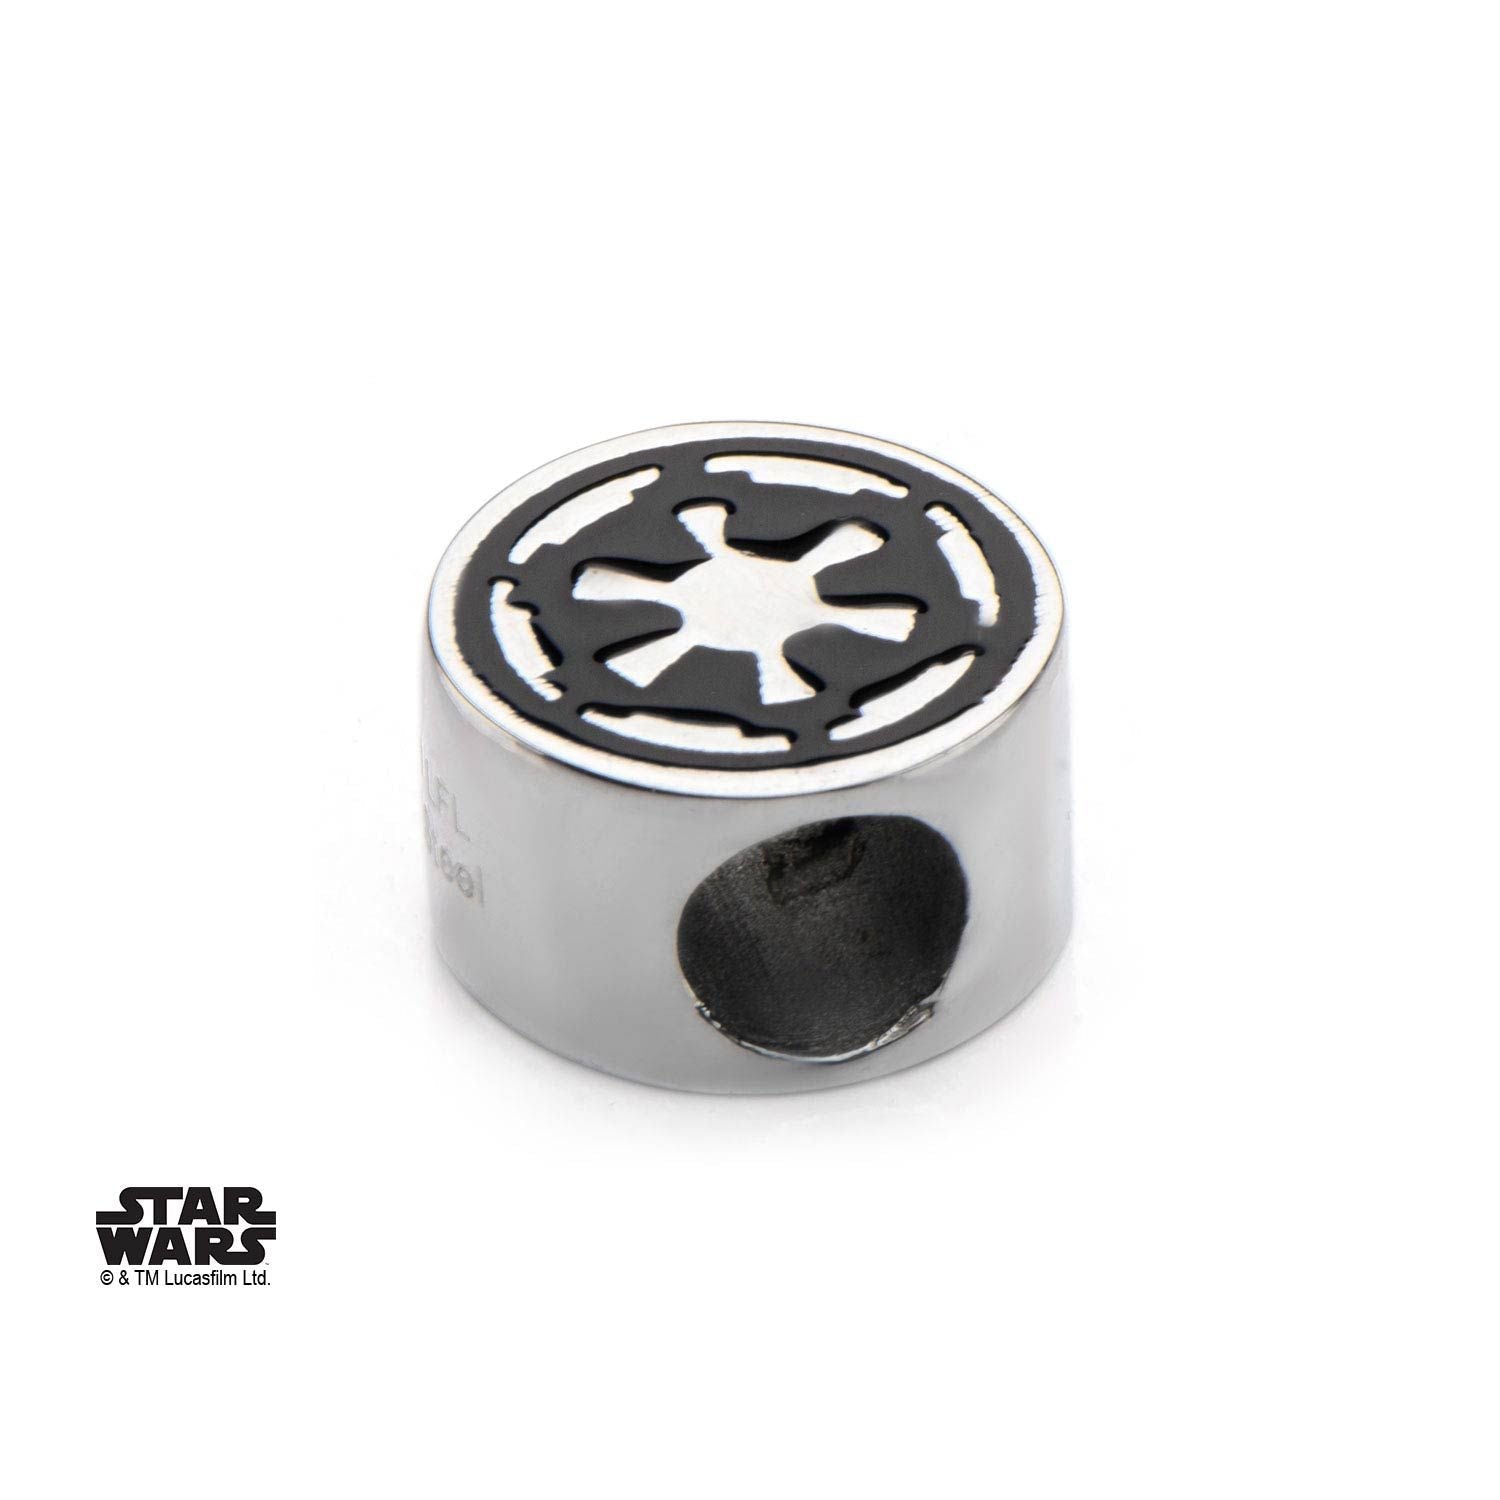 STAR WARS Star Wars Galactic Empire Symbol Bead Charm A -Rebel Bod-RebelBod